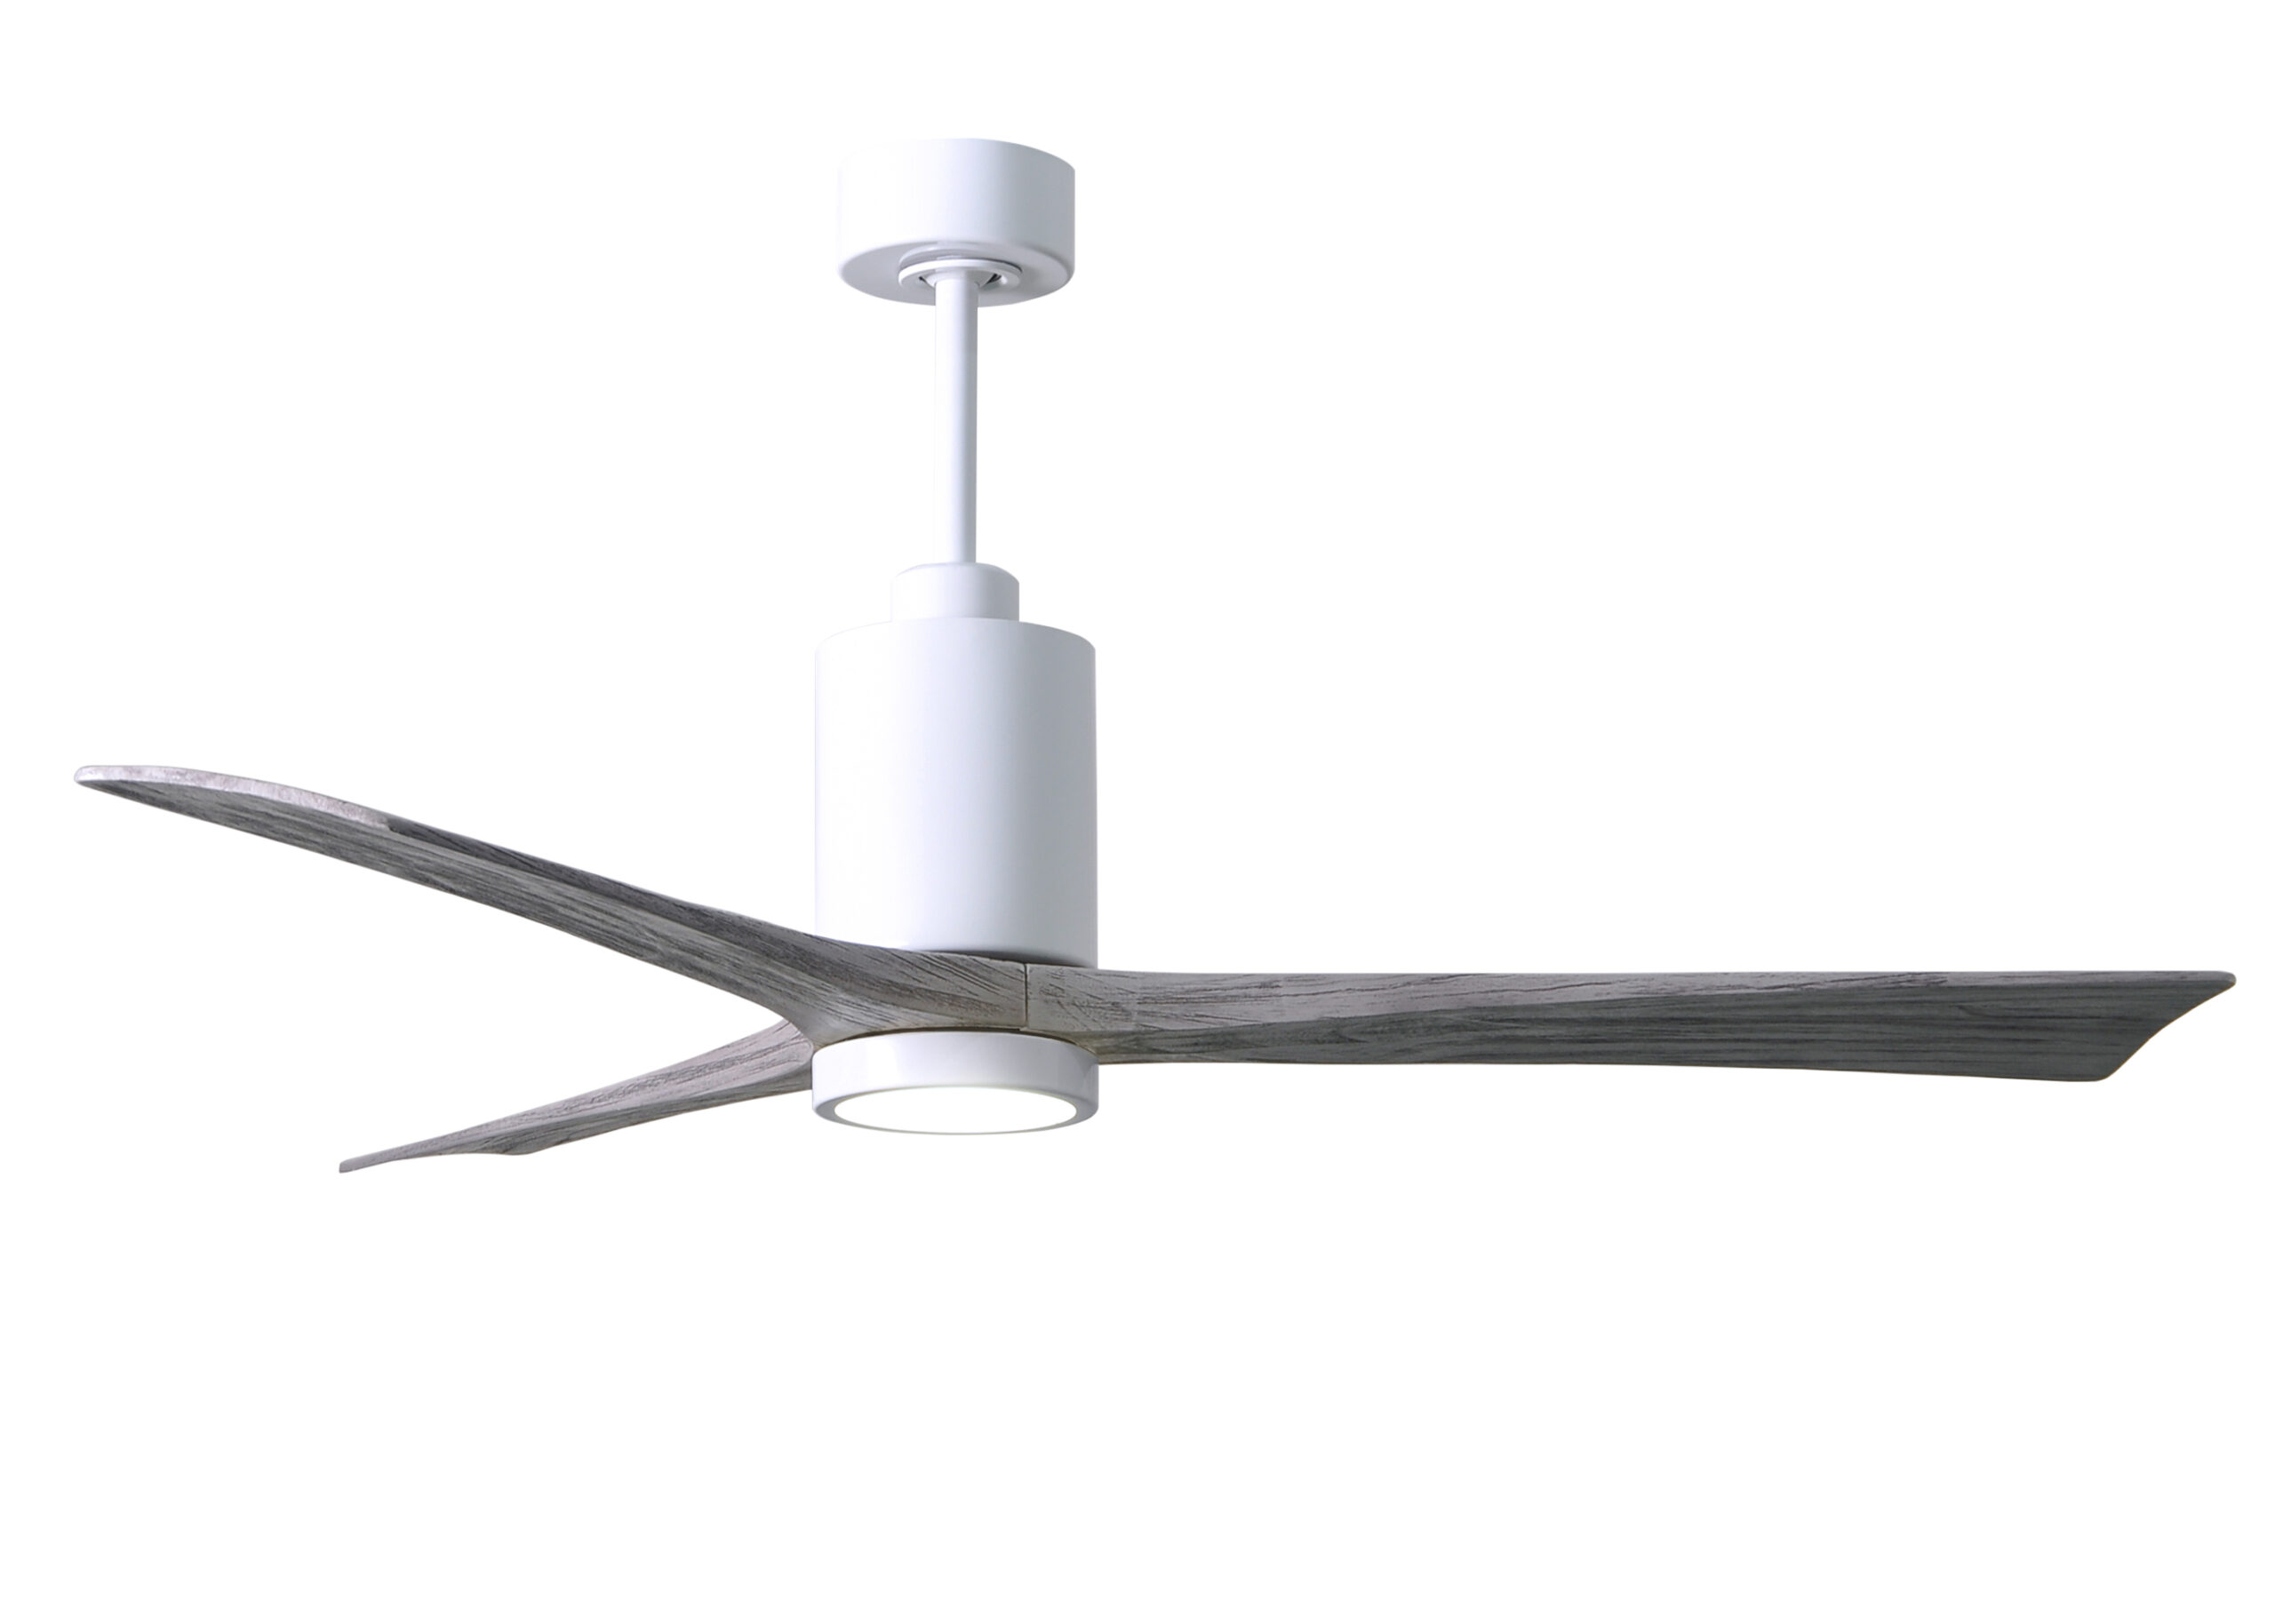 Patrícia-3 ceiling fan in Gloss White with 60” Barn Wood blades made by Matthews Fan Company.